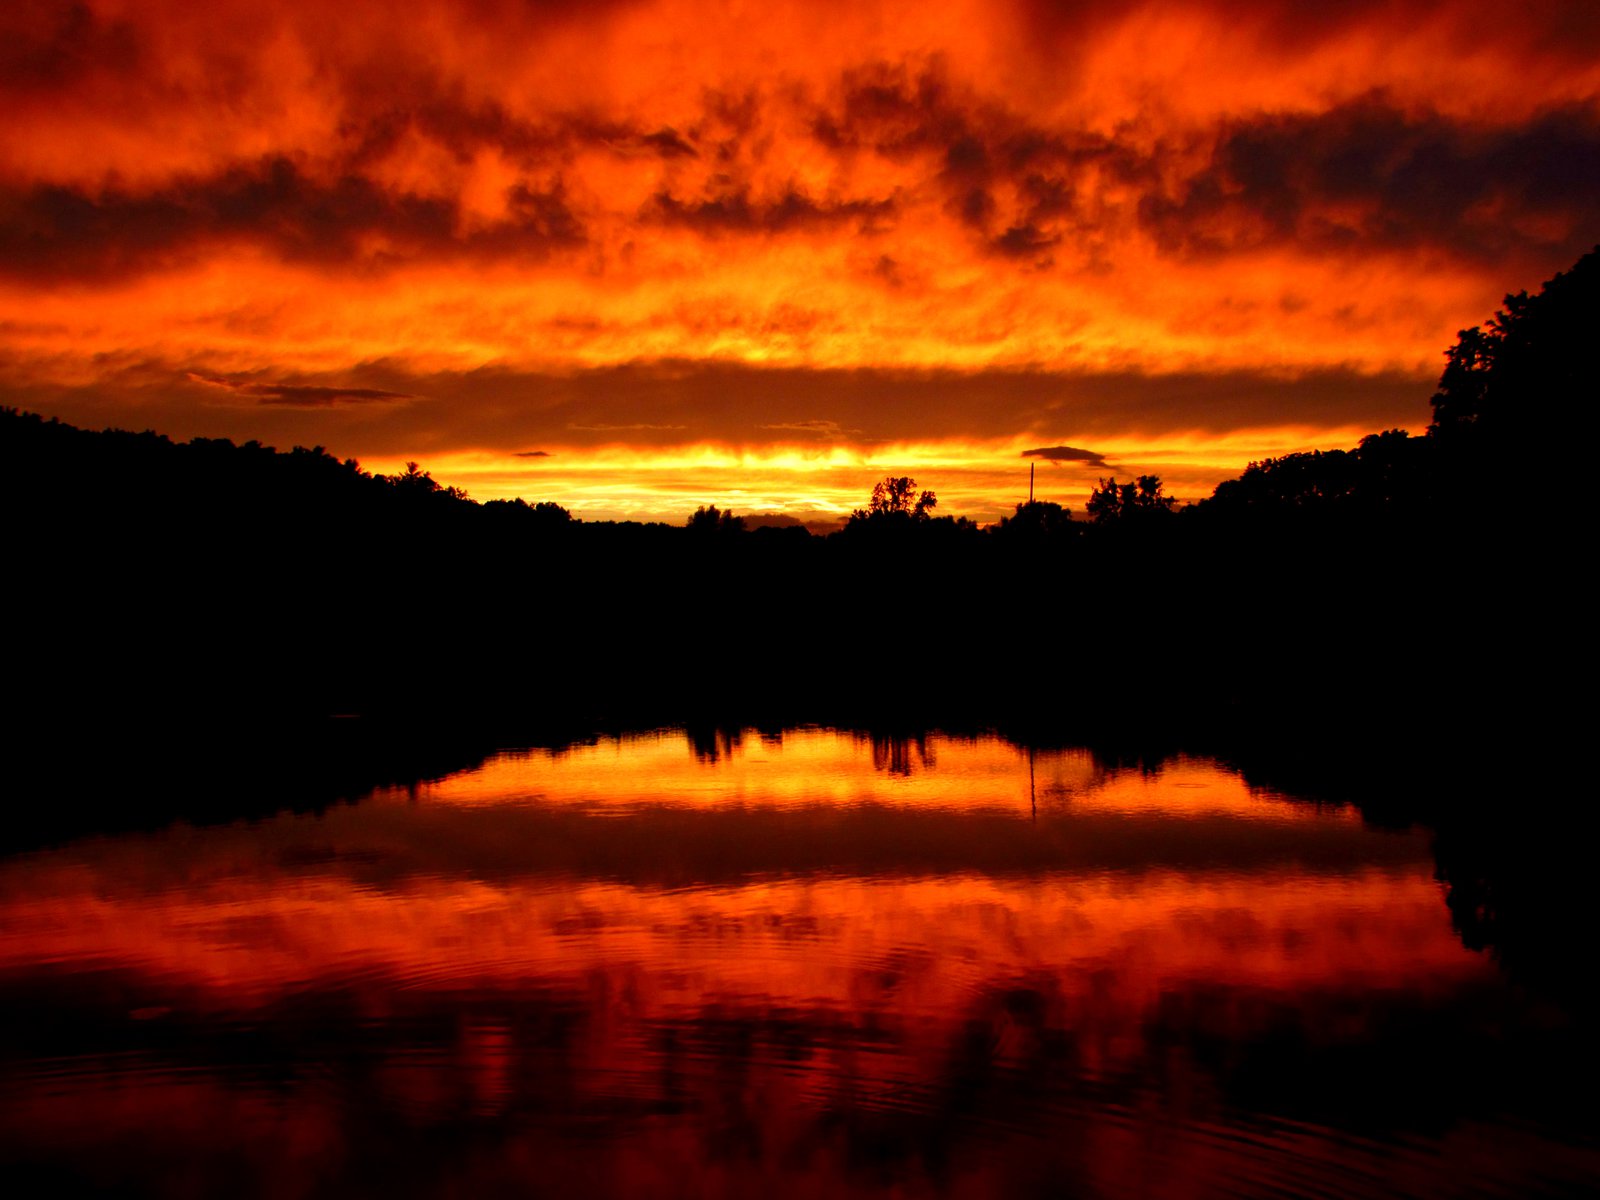 Flaming Sunset 1 by lightavion52 on DeviantArt